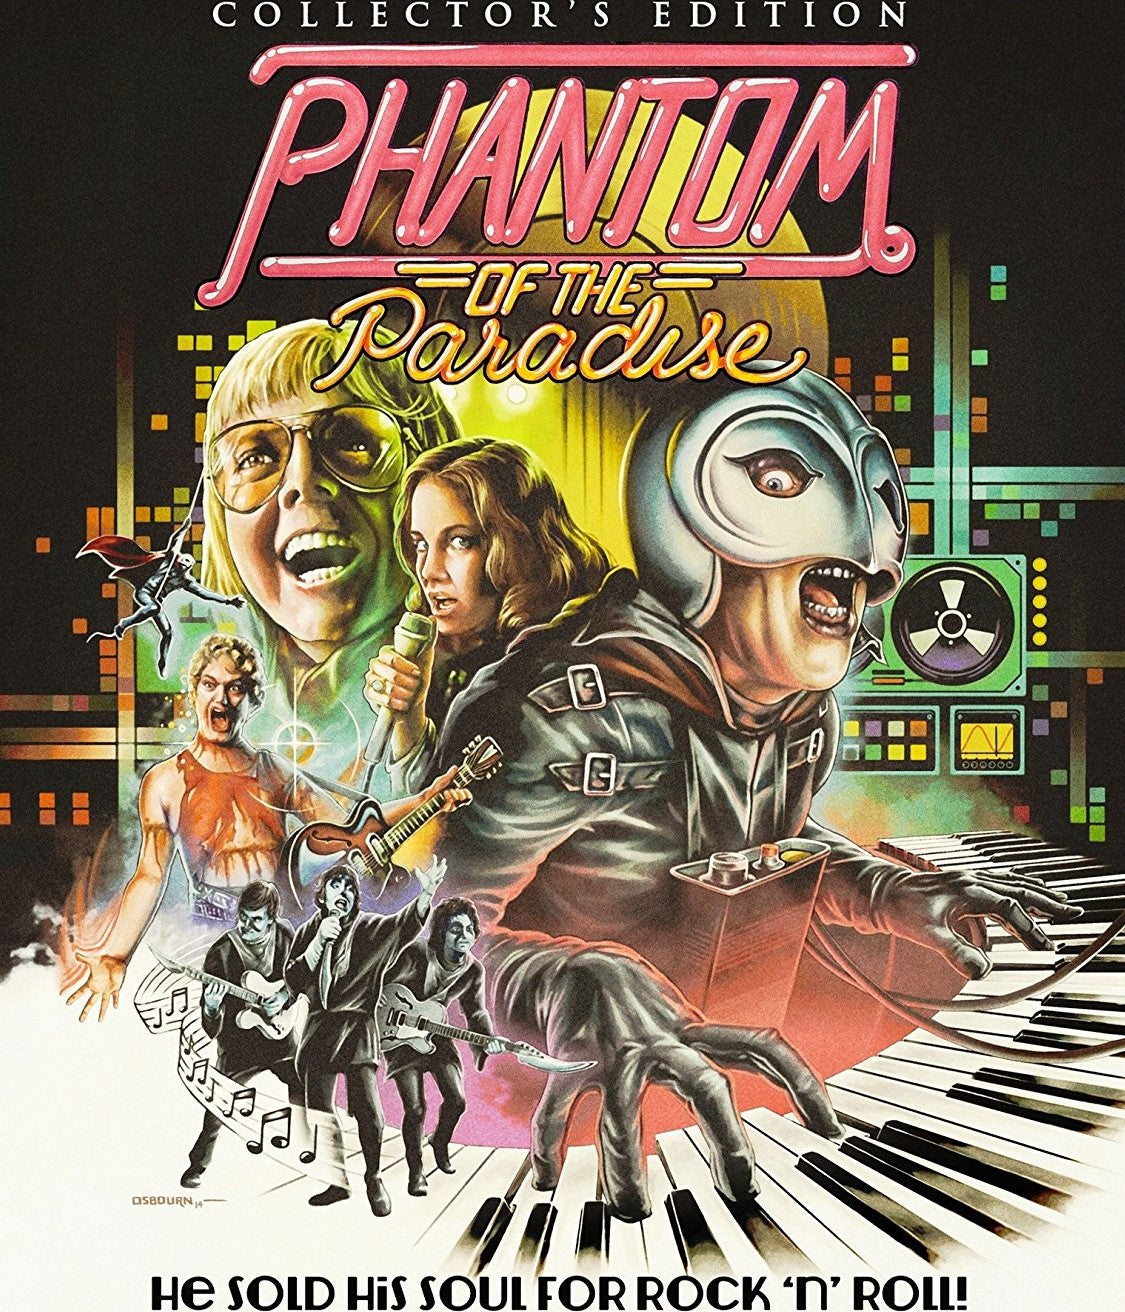 Phantom Of The Paradise (Collectors Edition) Blu-Ray Blu-Ray